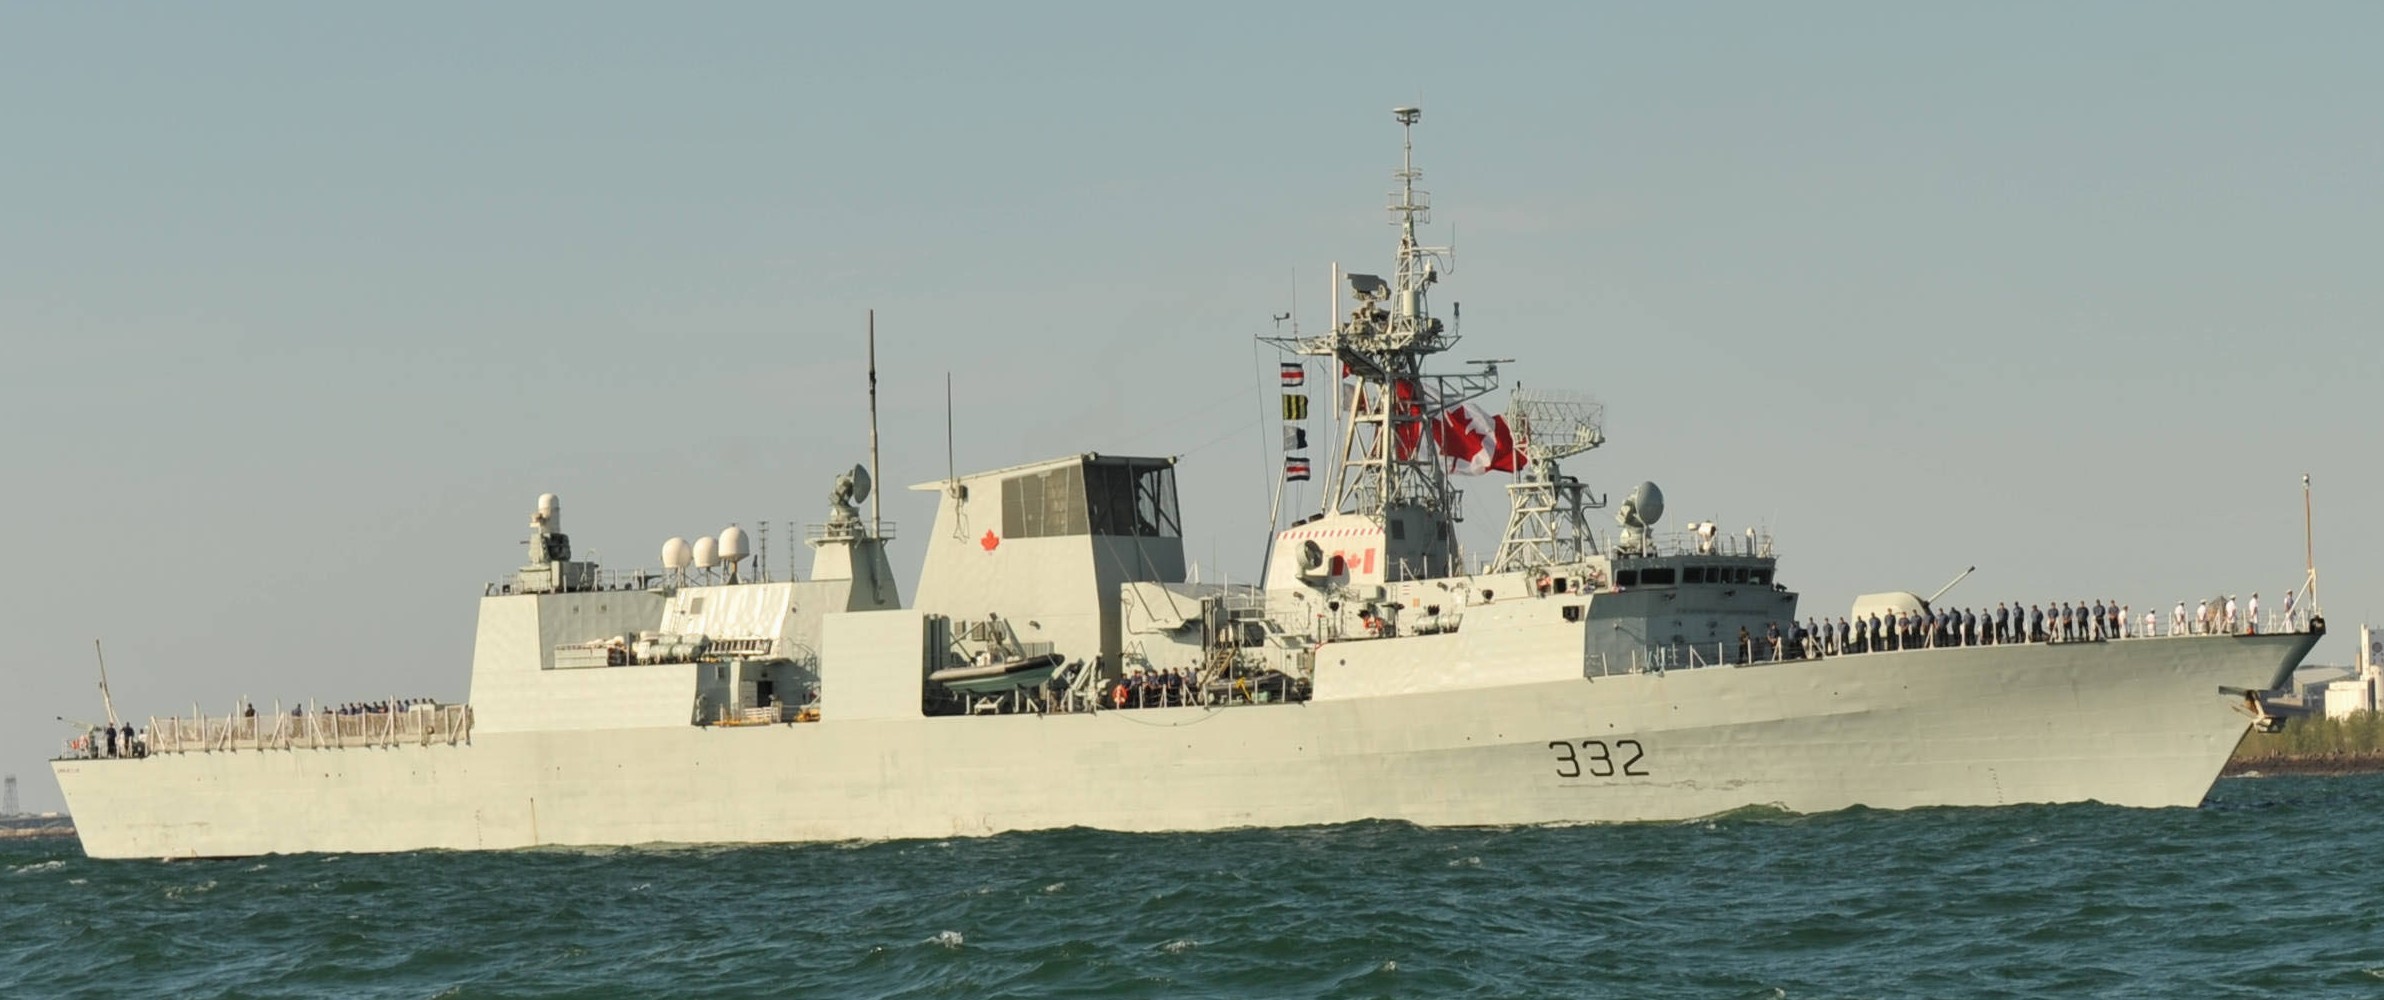 ffh-332 hmcs ville de quebec halifax class helicopter patrol frigate ncsm royal canadian navy 19